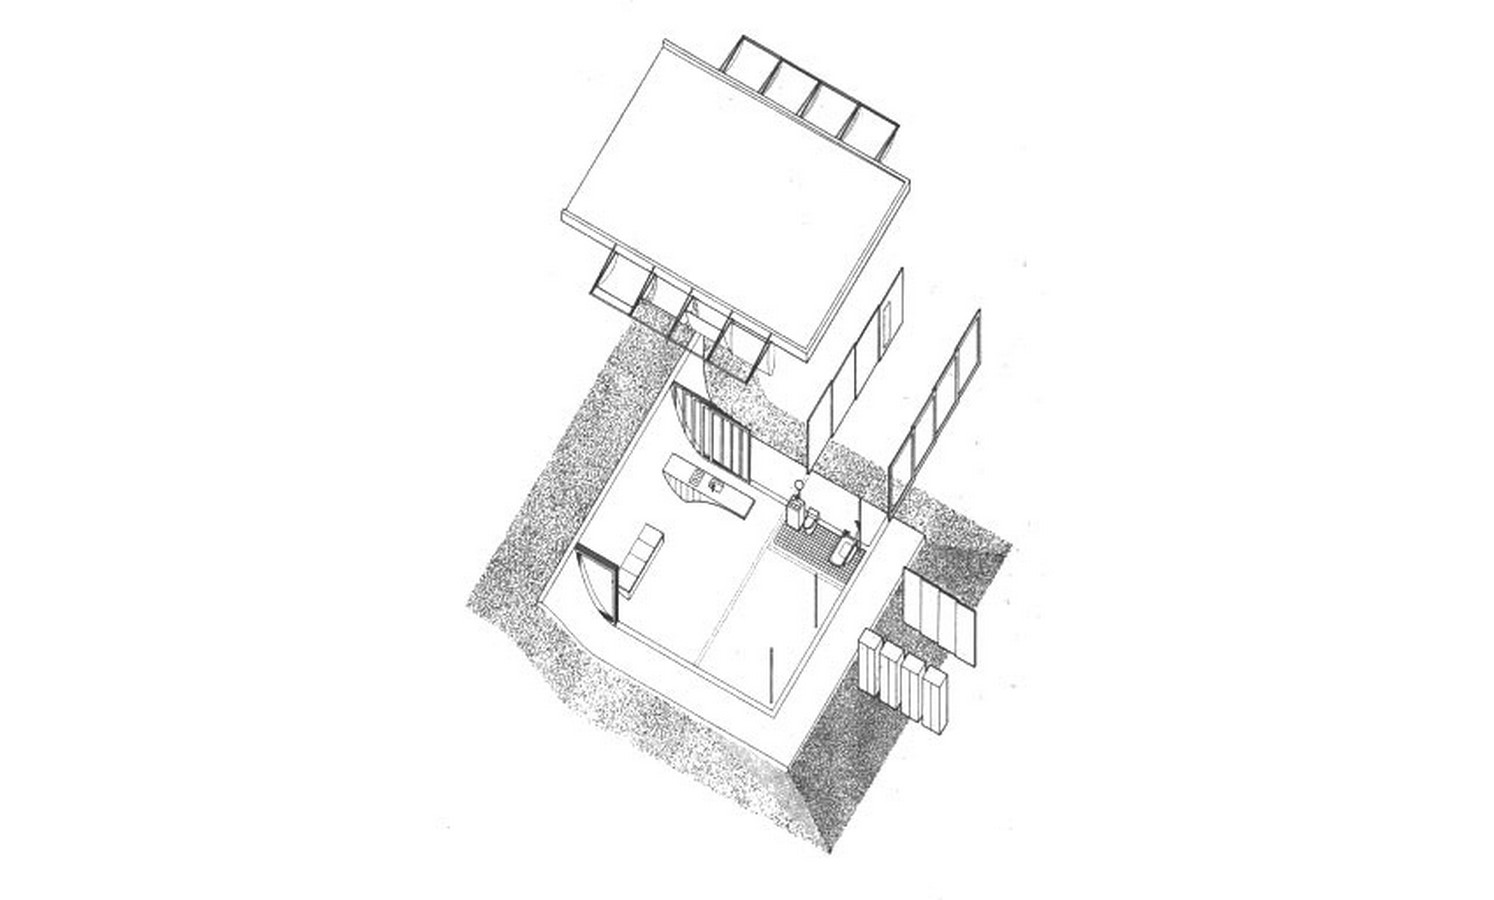 Wall-less House by Shigeru Ban: Universal Floor - Sheet5